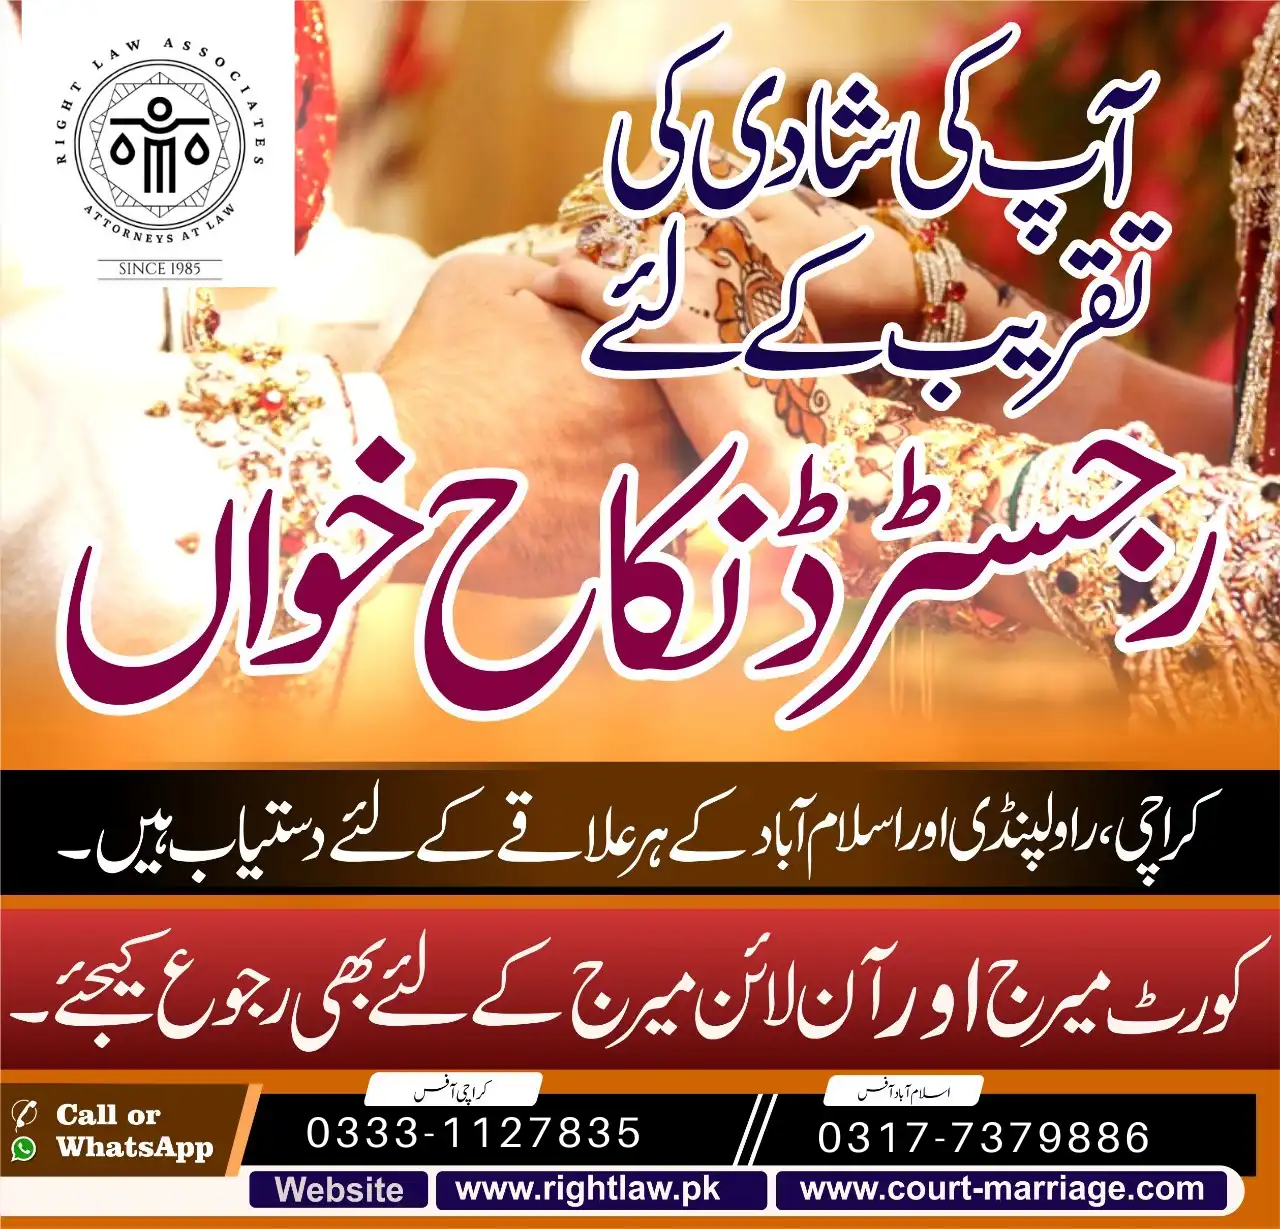 Court Marriage- nikah khawan services in Karachi and Islamabad Pakistan